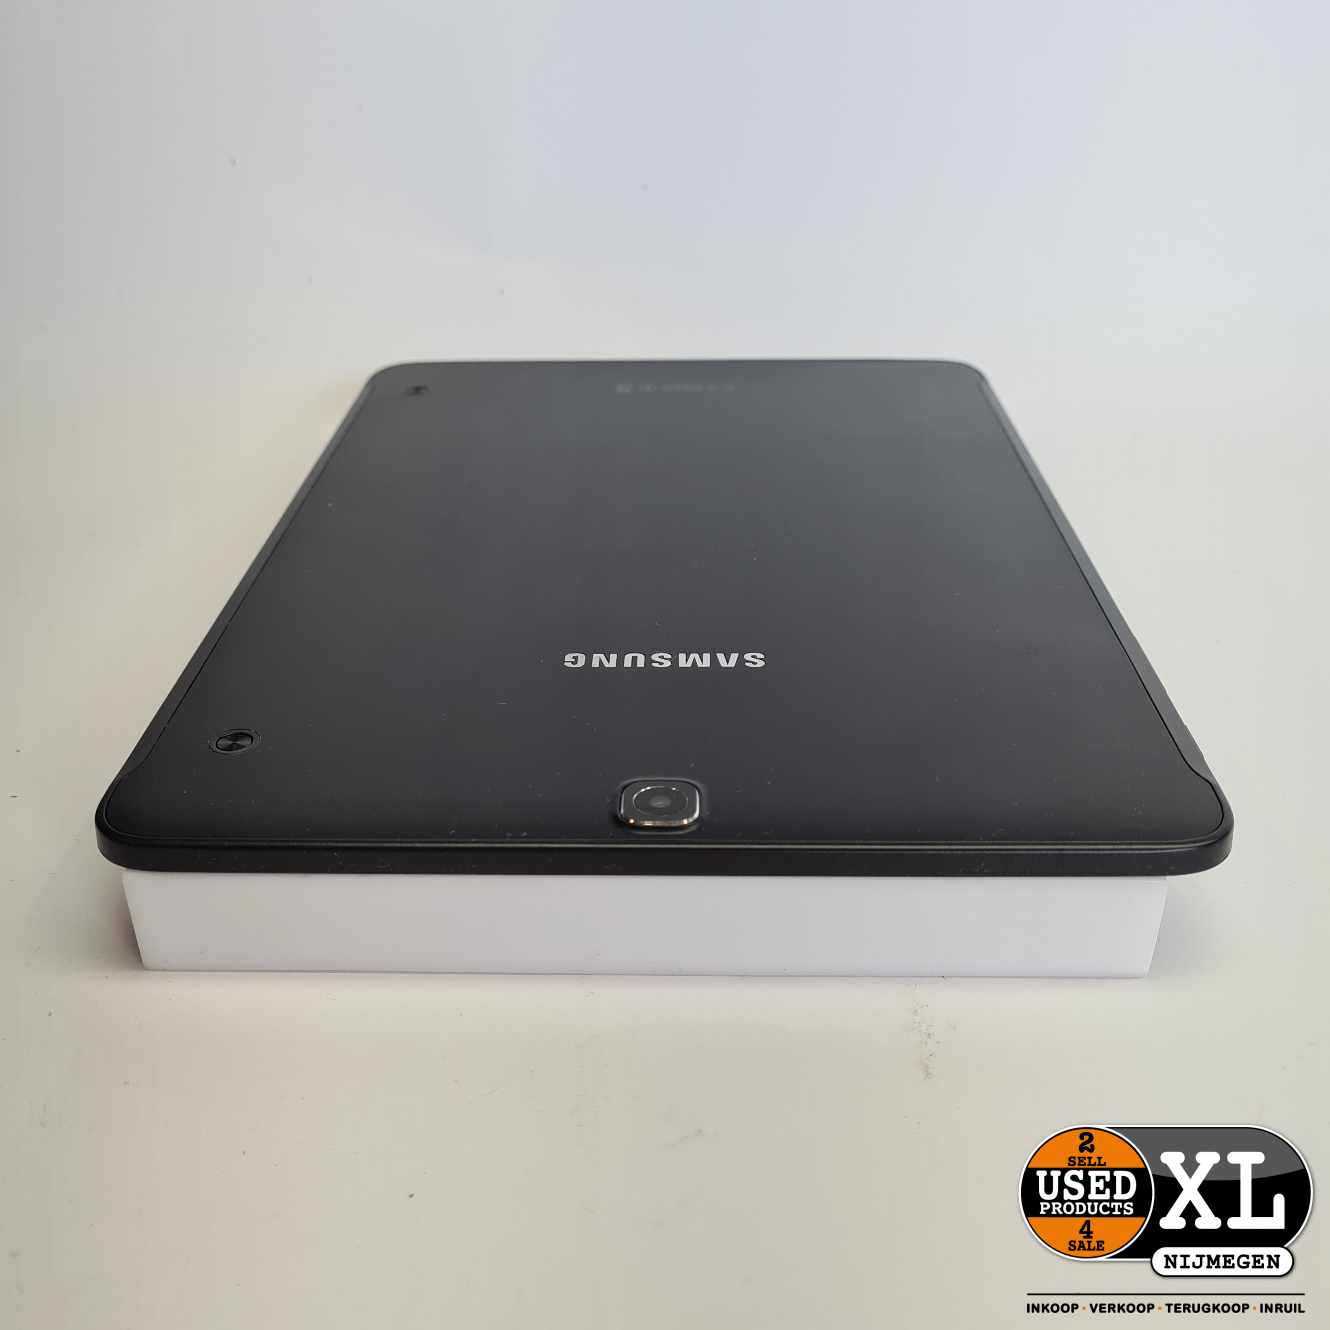 Becks Genre micro Samsung Galaxy Tab S2 9,7 inch Zwart 32GB | Nette Staat - Used Products  Nijmegen XL